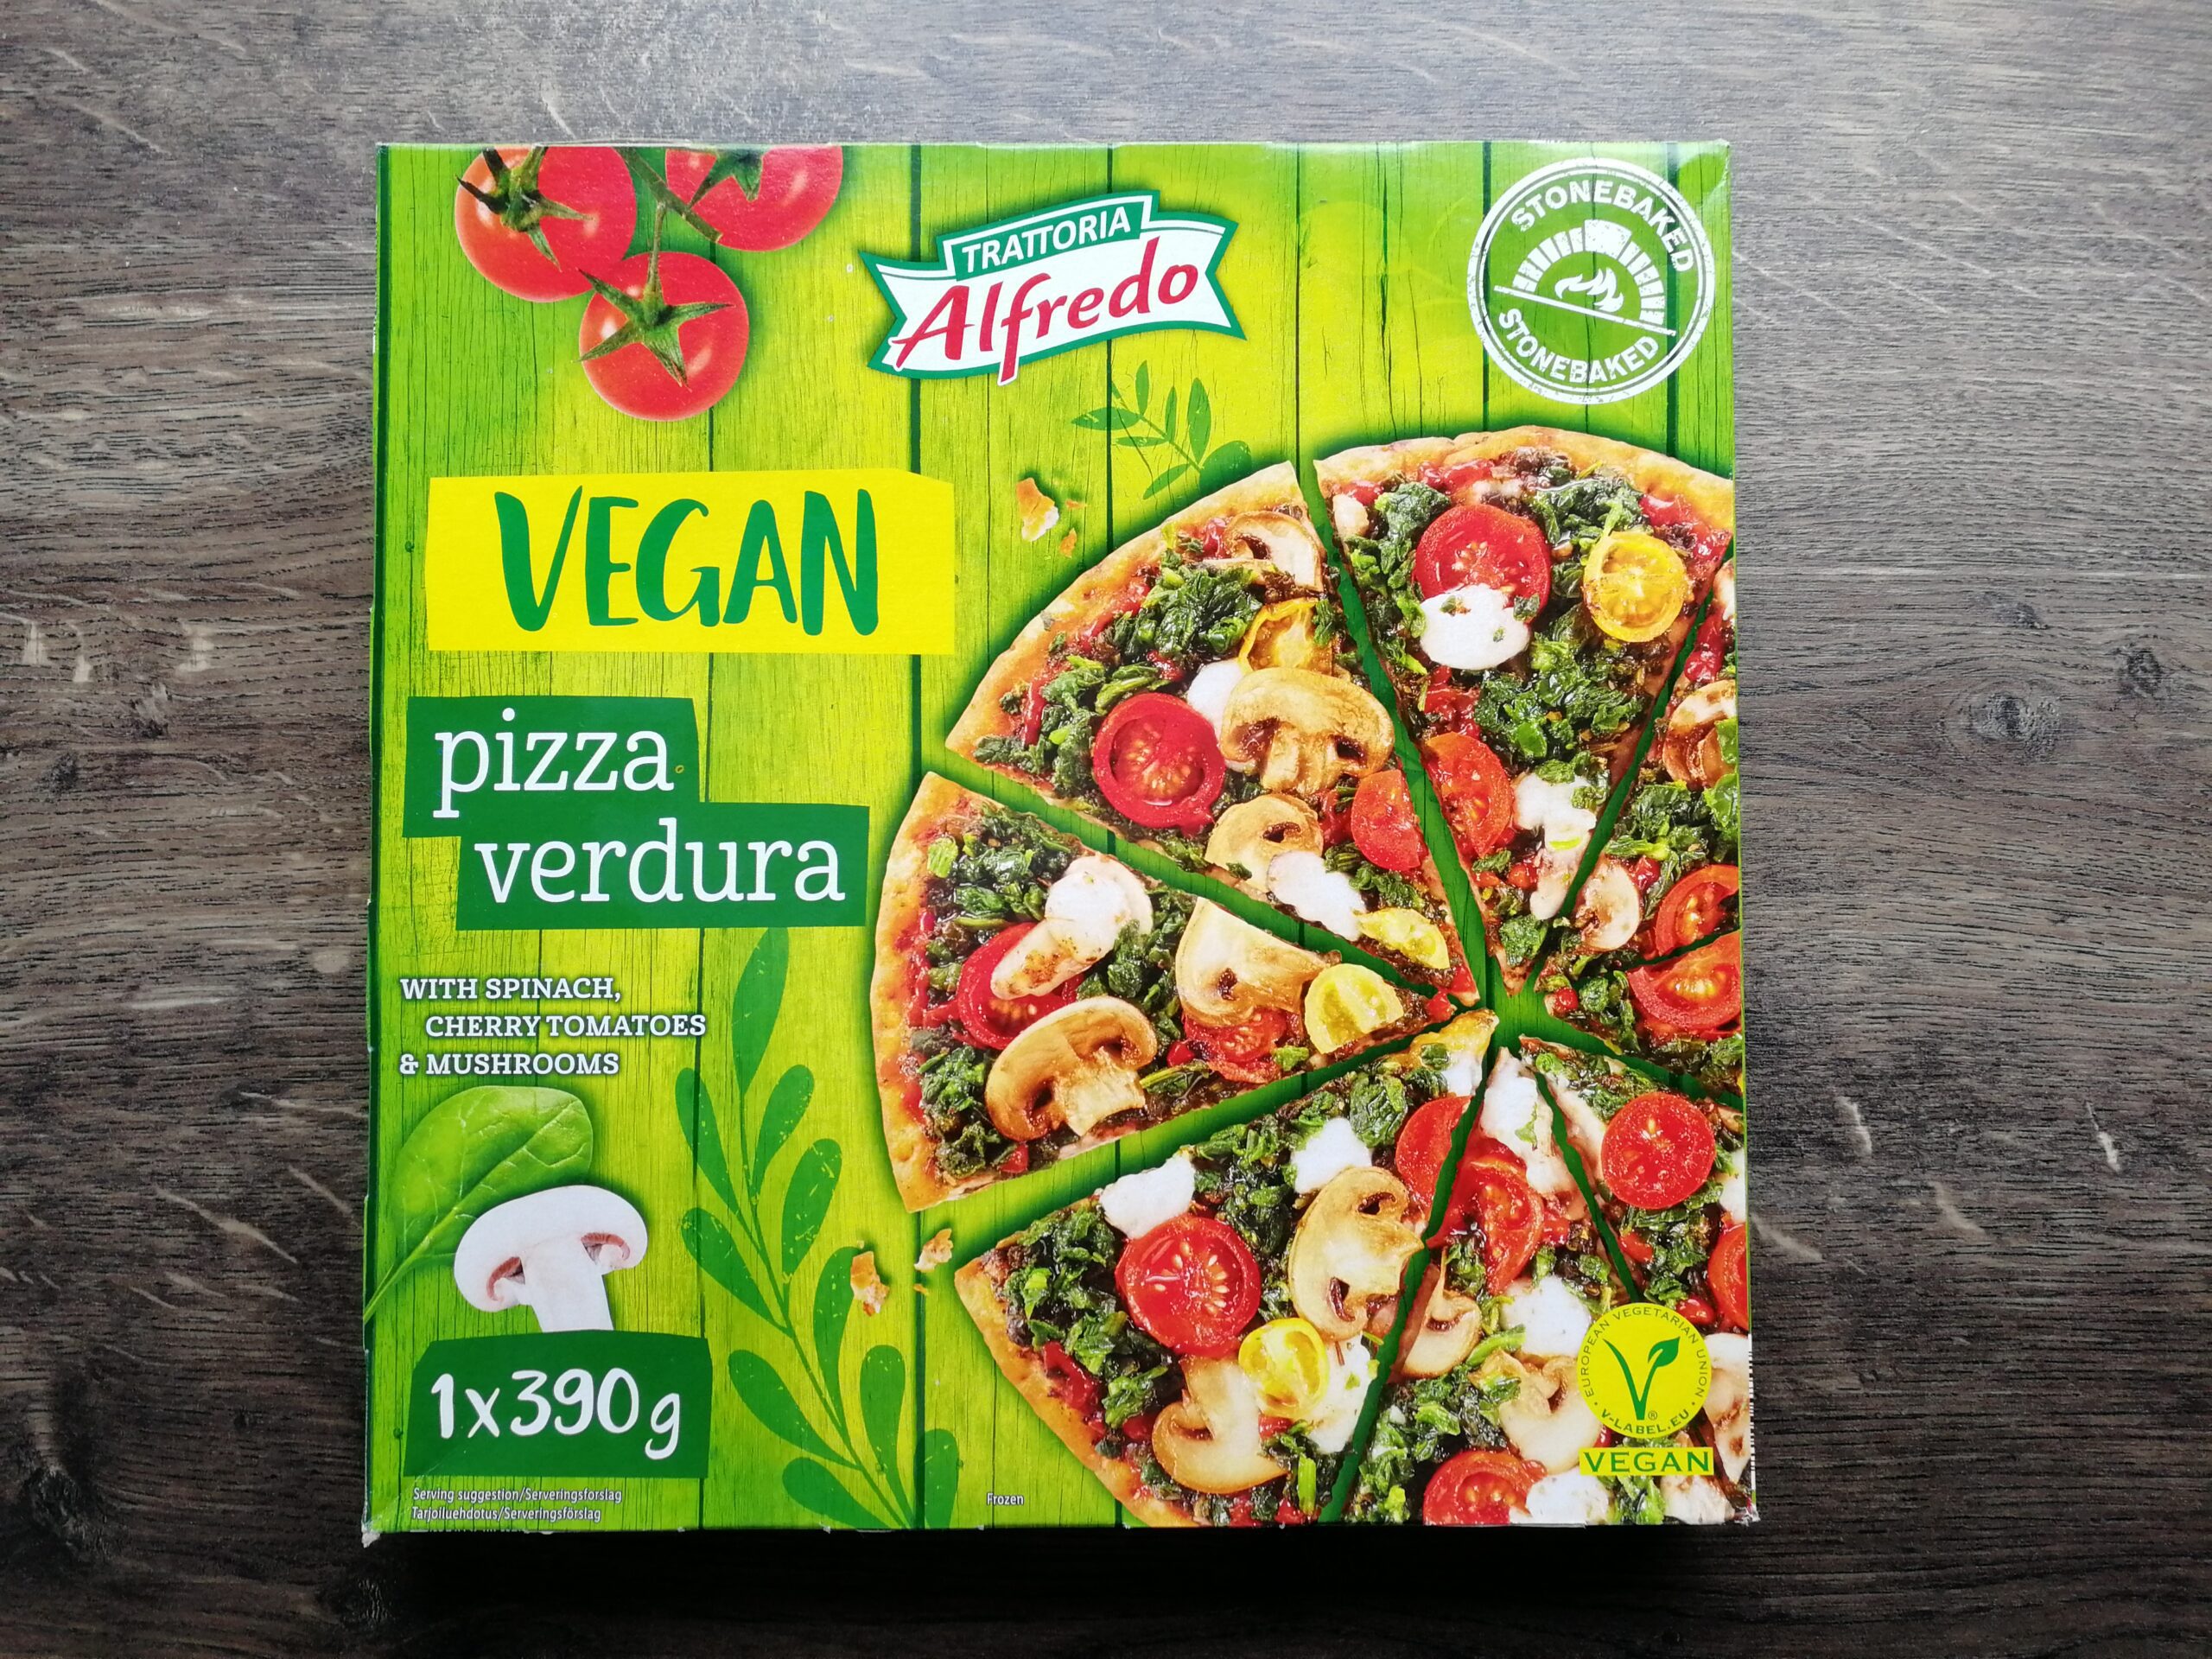 Trattoria Alfredo Vegan Pizza Verdura fra Lidl